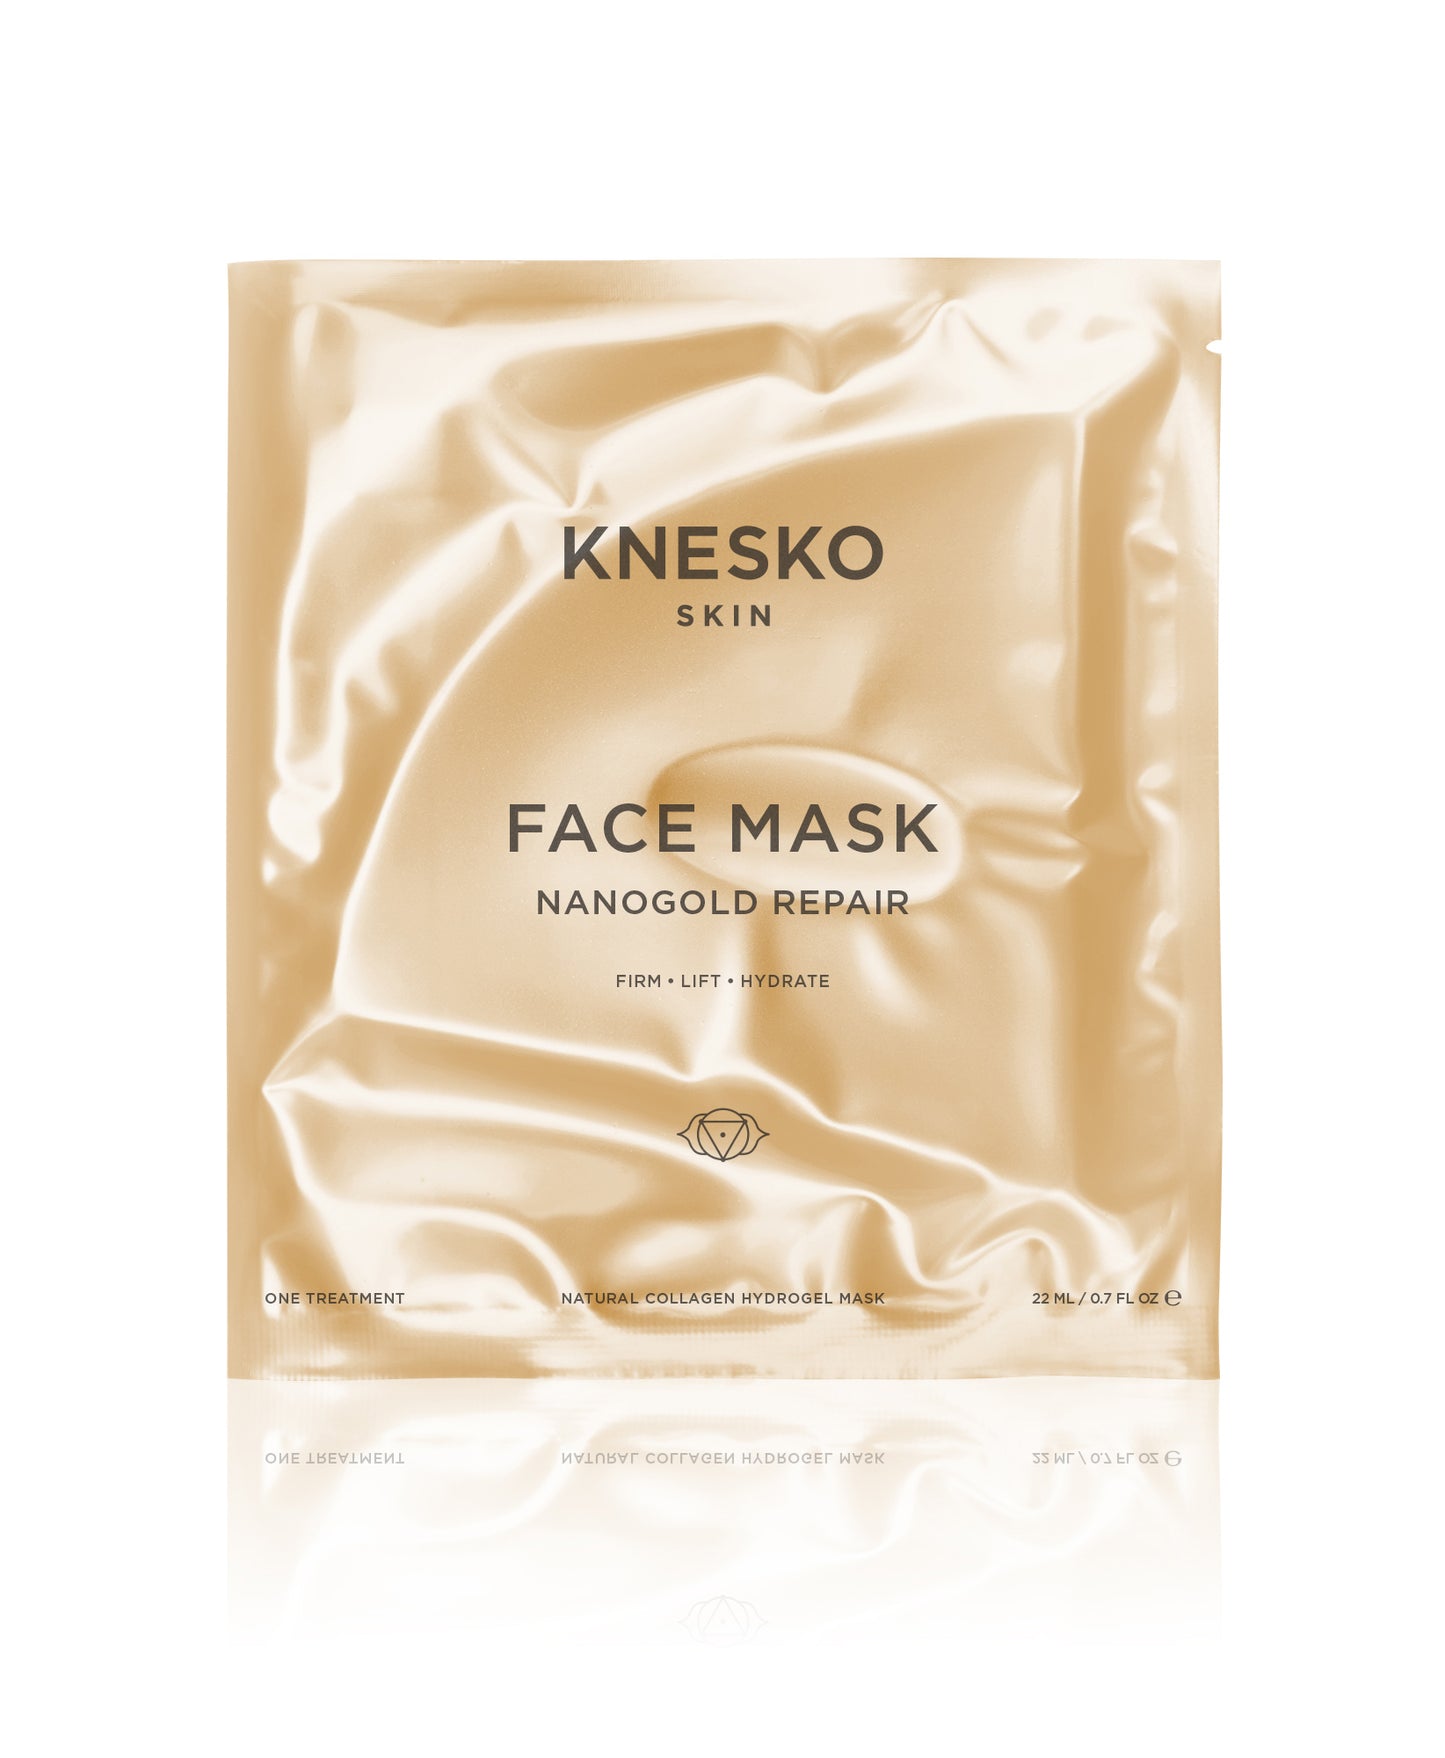 Nano Gold Repair Collagen Face Mask packaging.